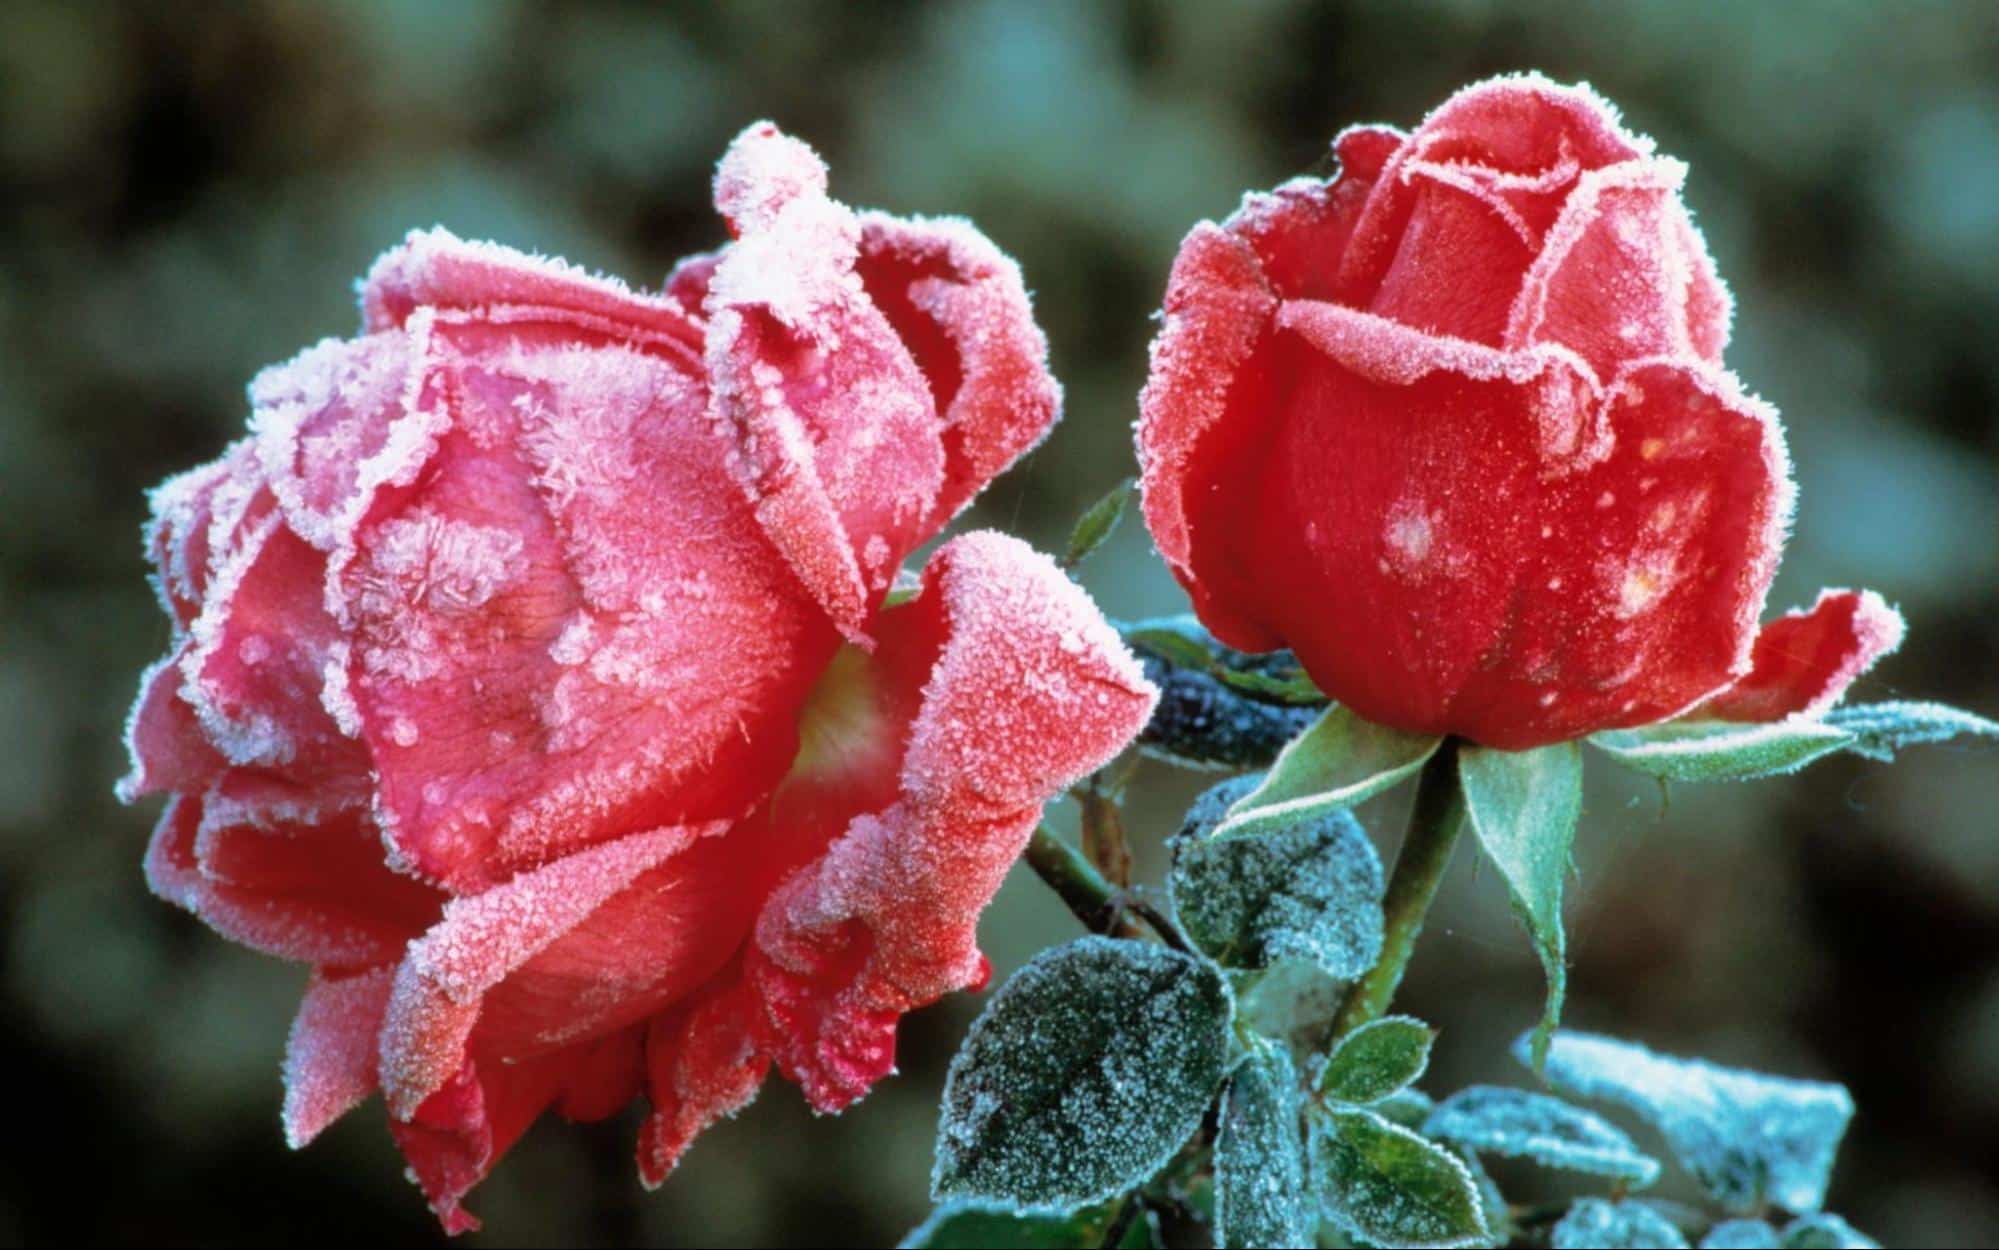 Winter rose (Hellebores) plant